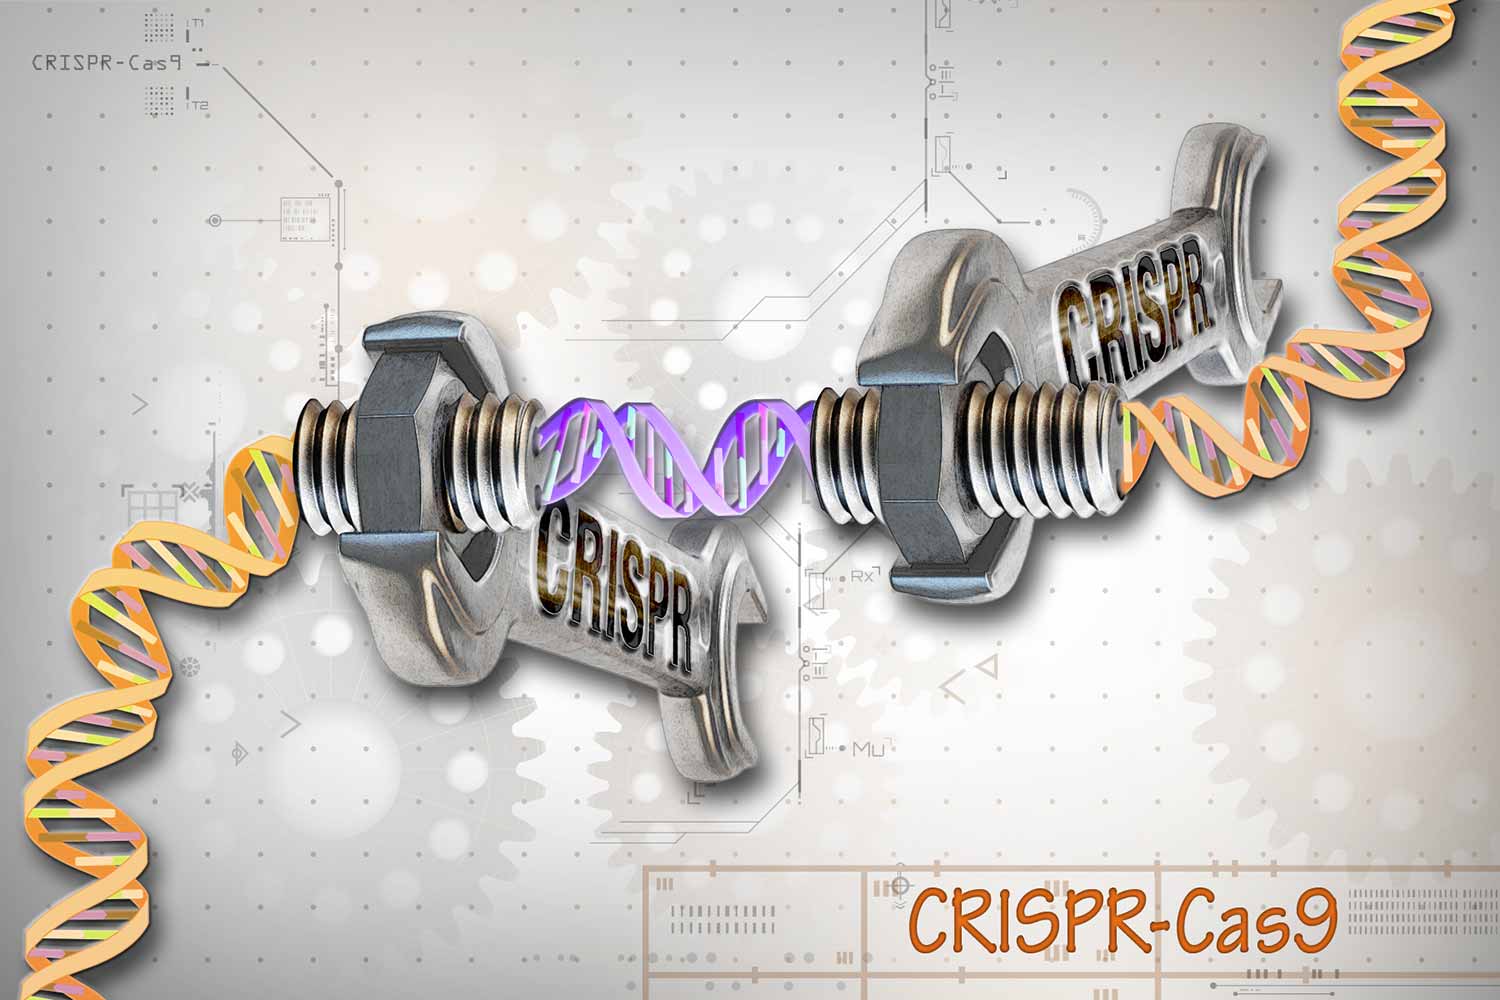 Image: CRISPR/Cas9